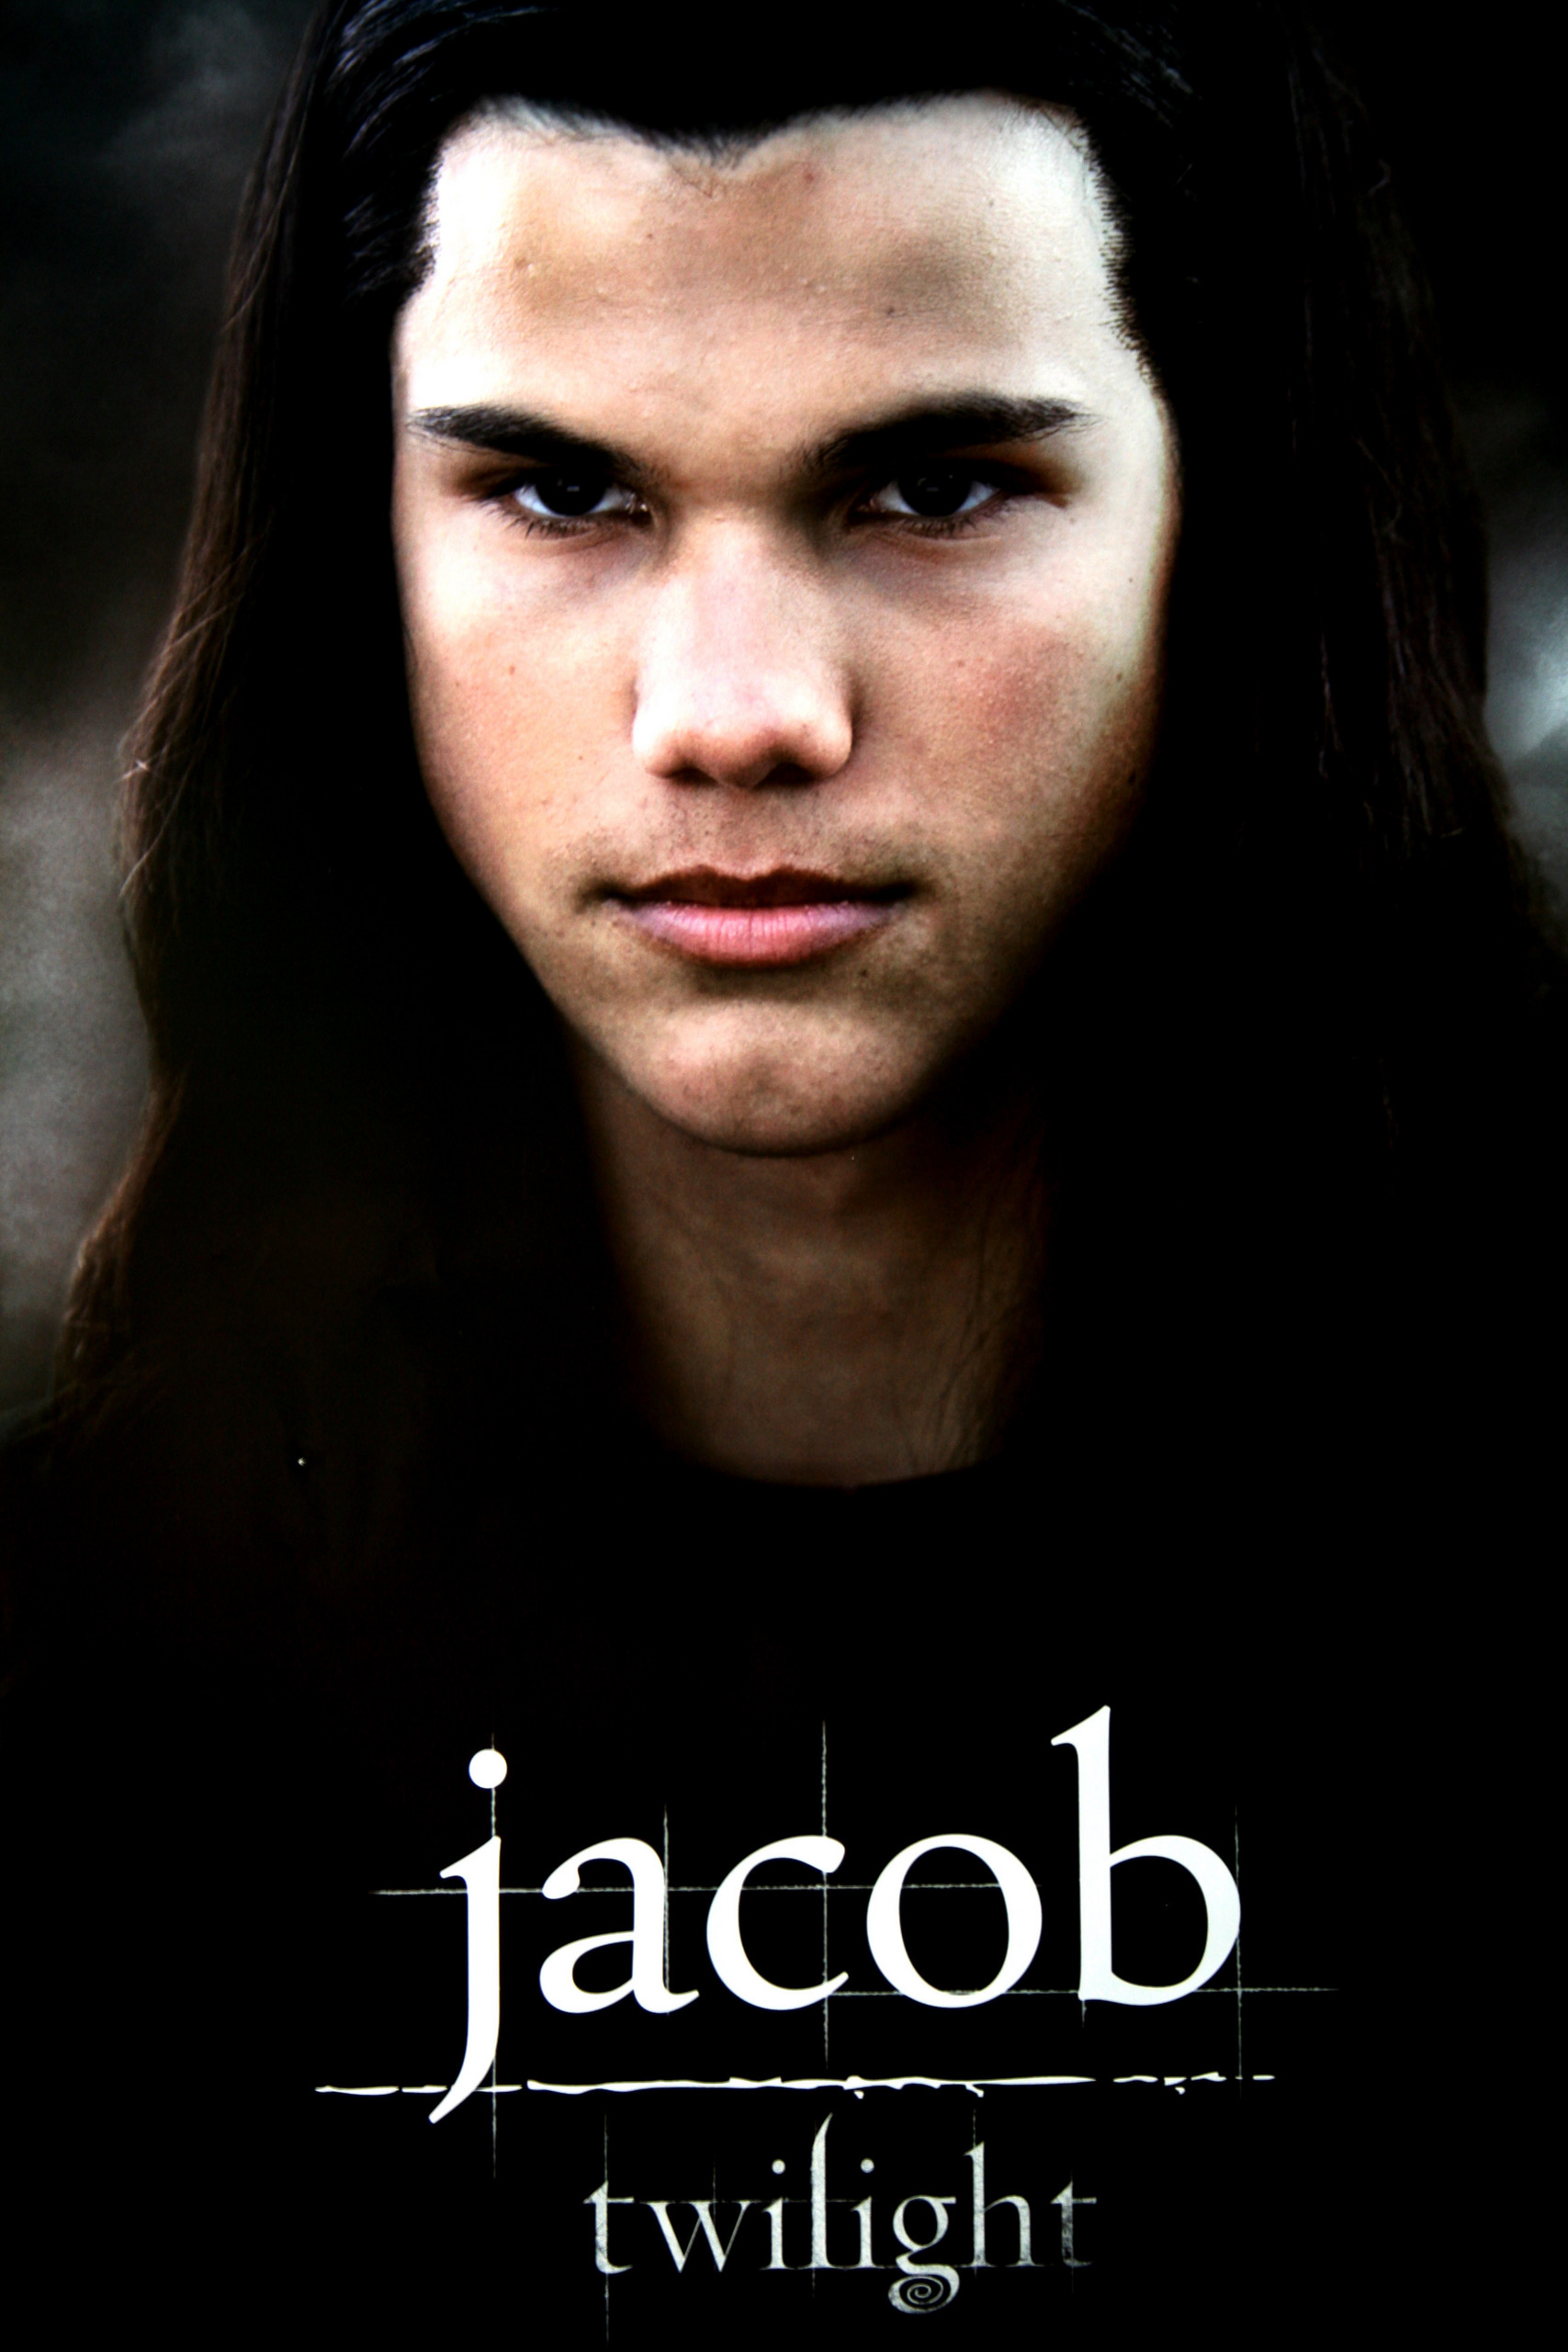 Jacob-Black-Poster-twilight-series-3820803-1707-2560.jpg